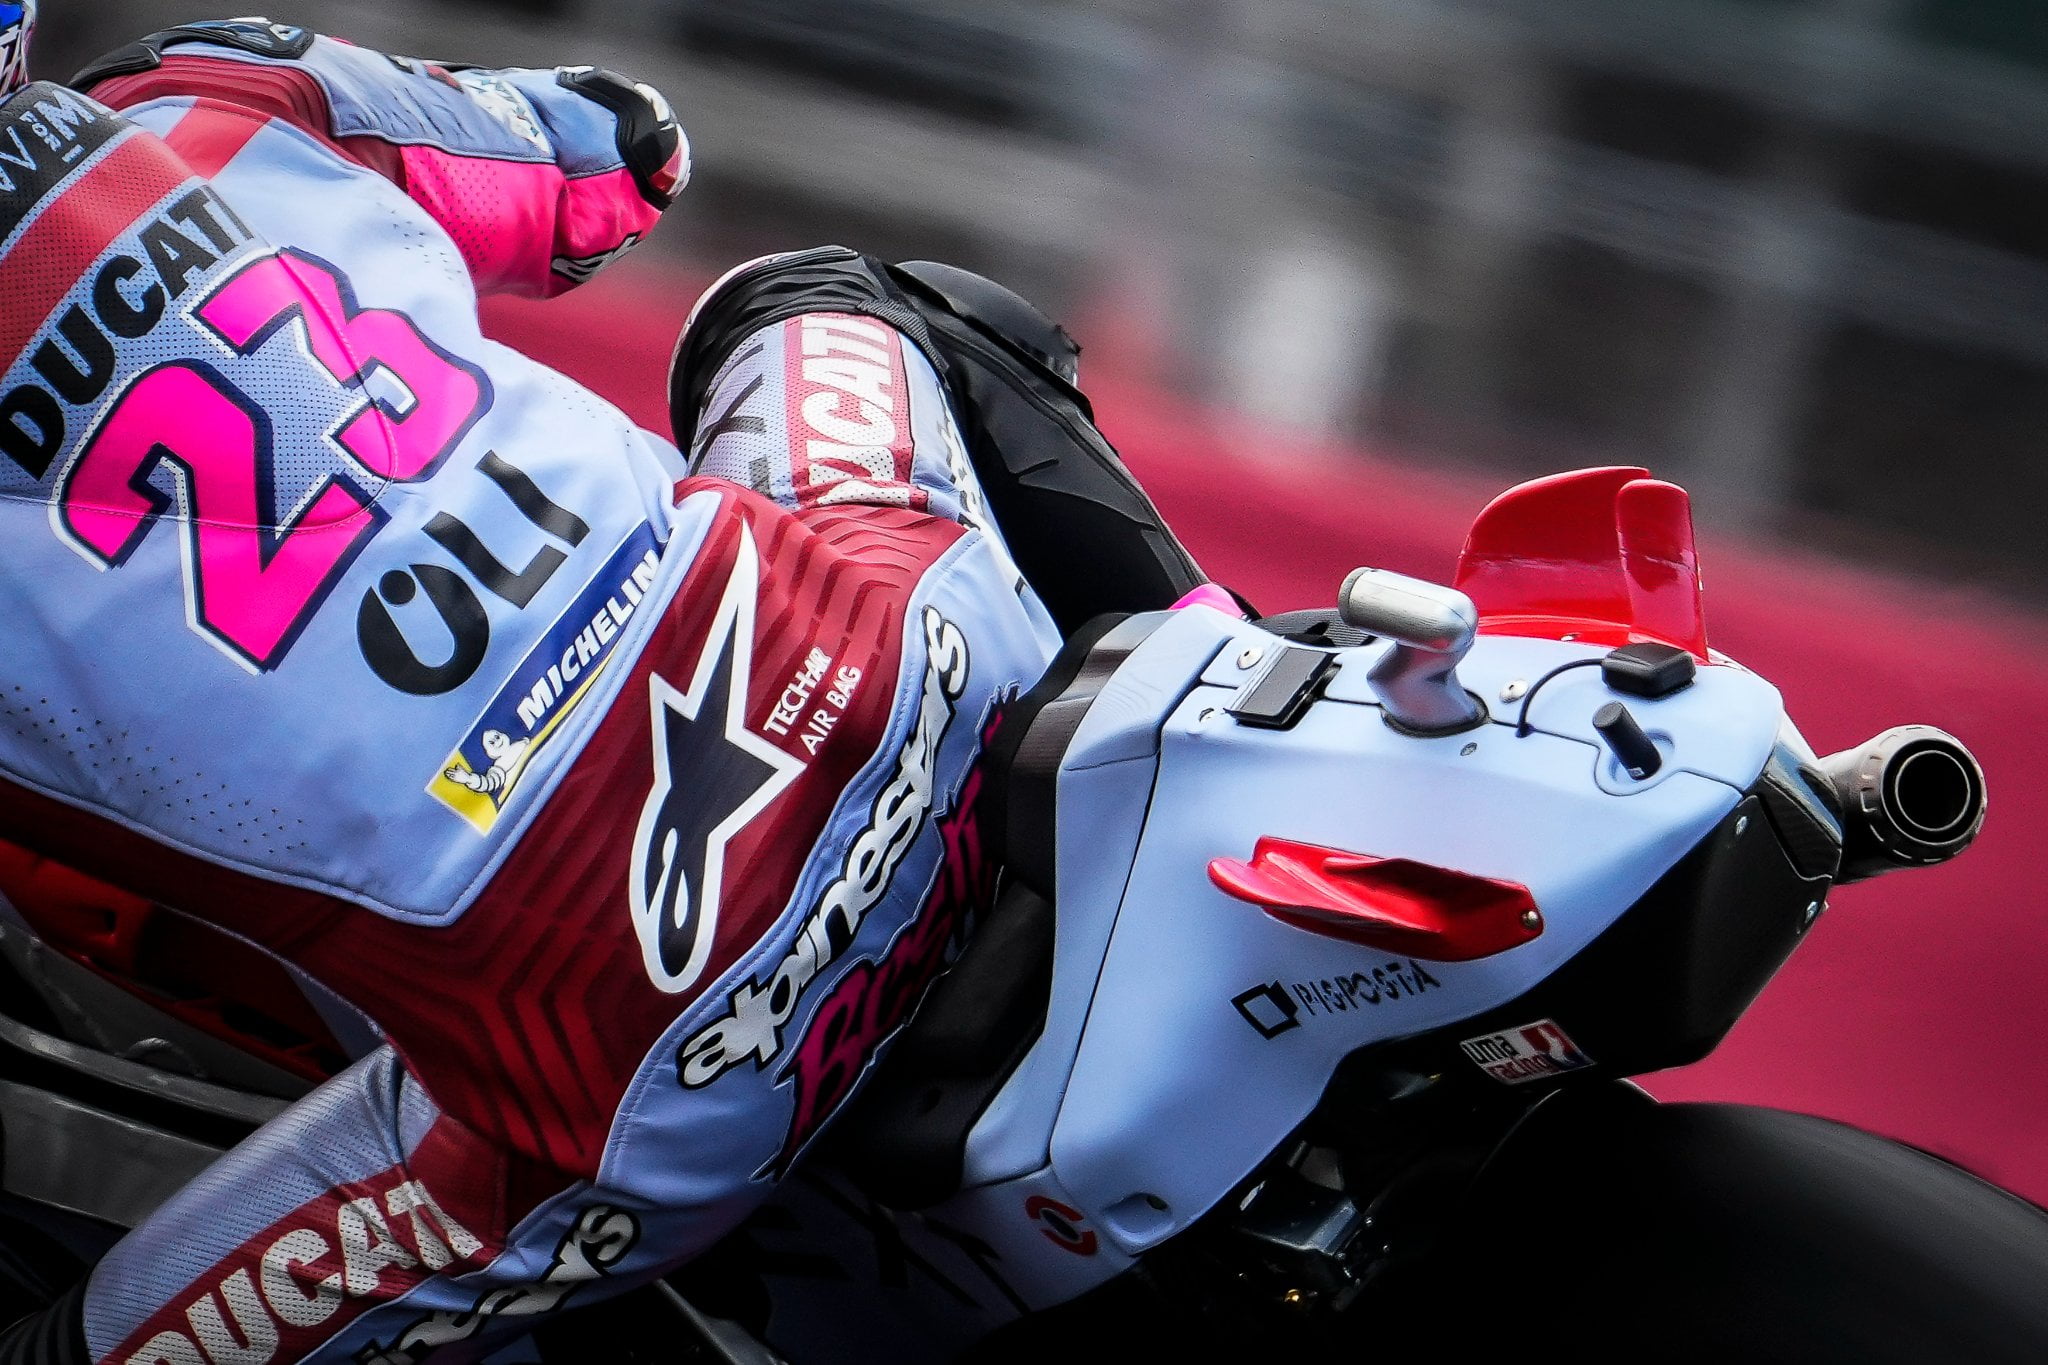 MotoGP Motegi : Ducati double ses ailerons ! - Moto-Station